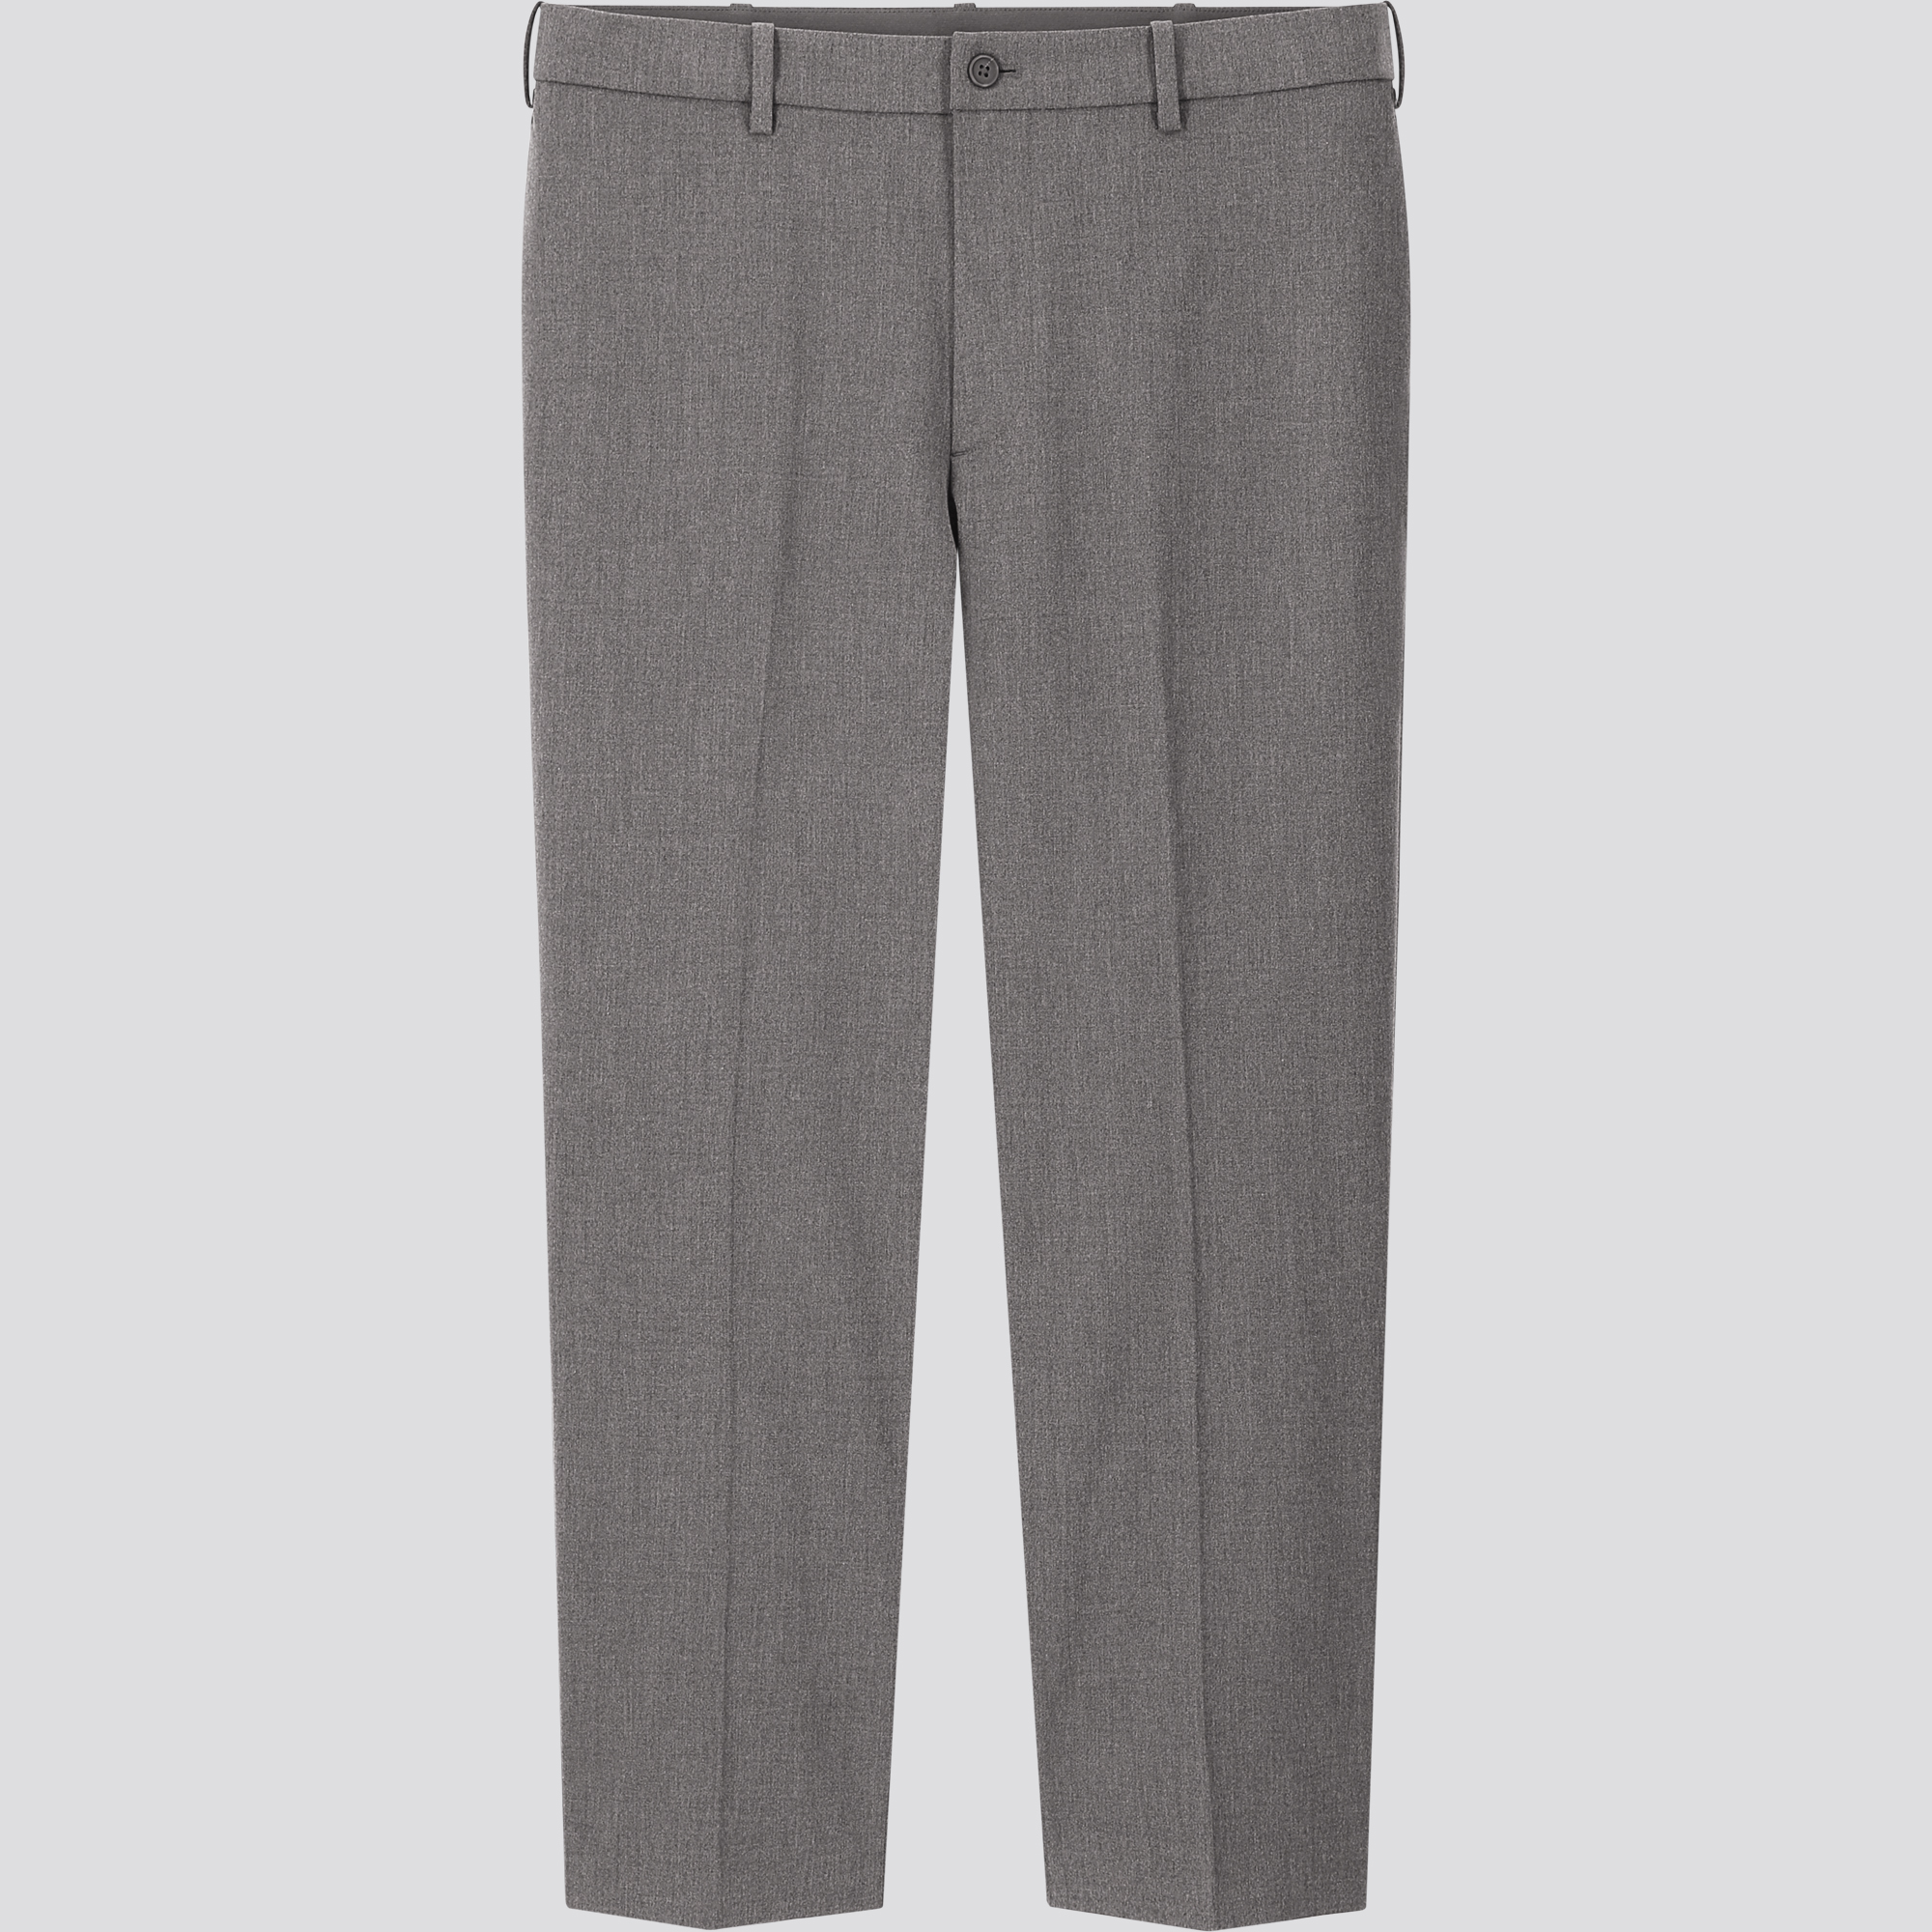 Uniqlo представил обновленные брюки EZY для мужчин и женщин (фото 3)